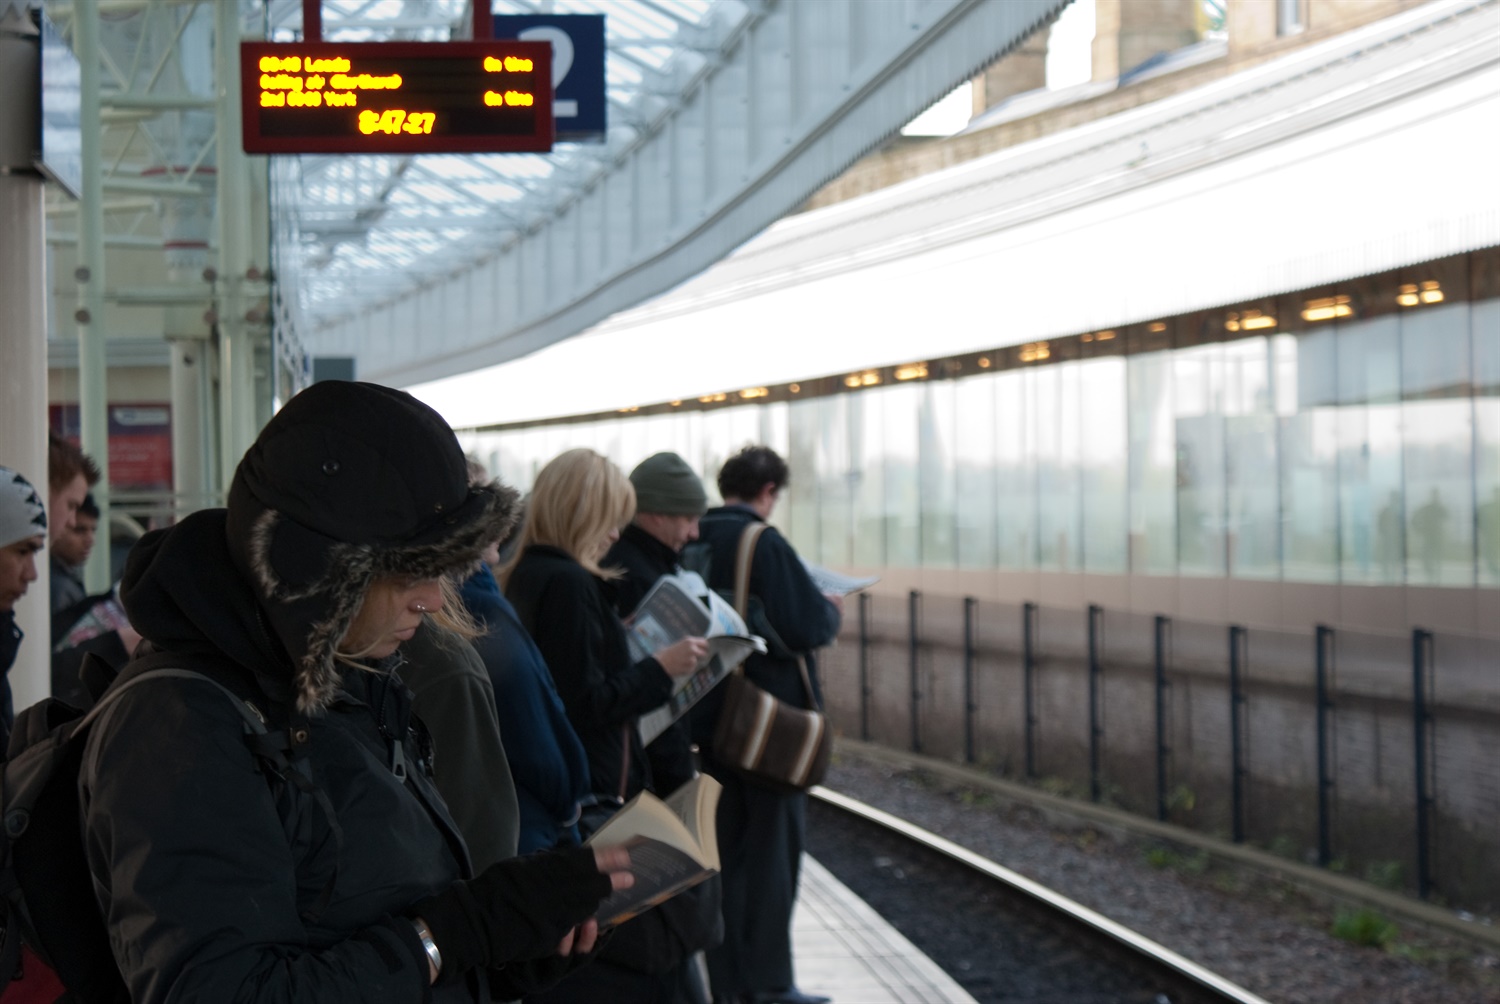 Treating each rail passenger as a service partner